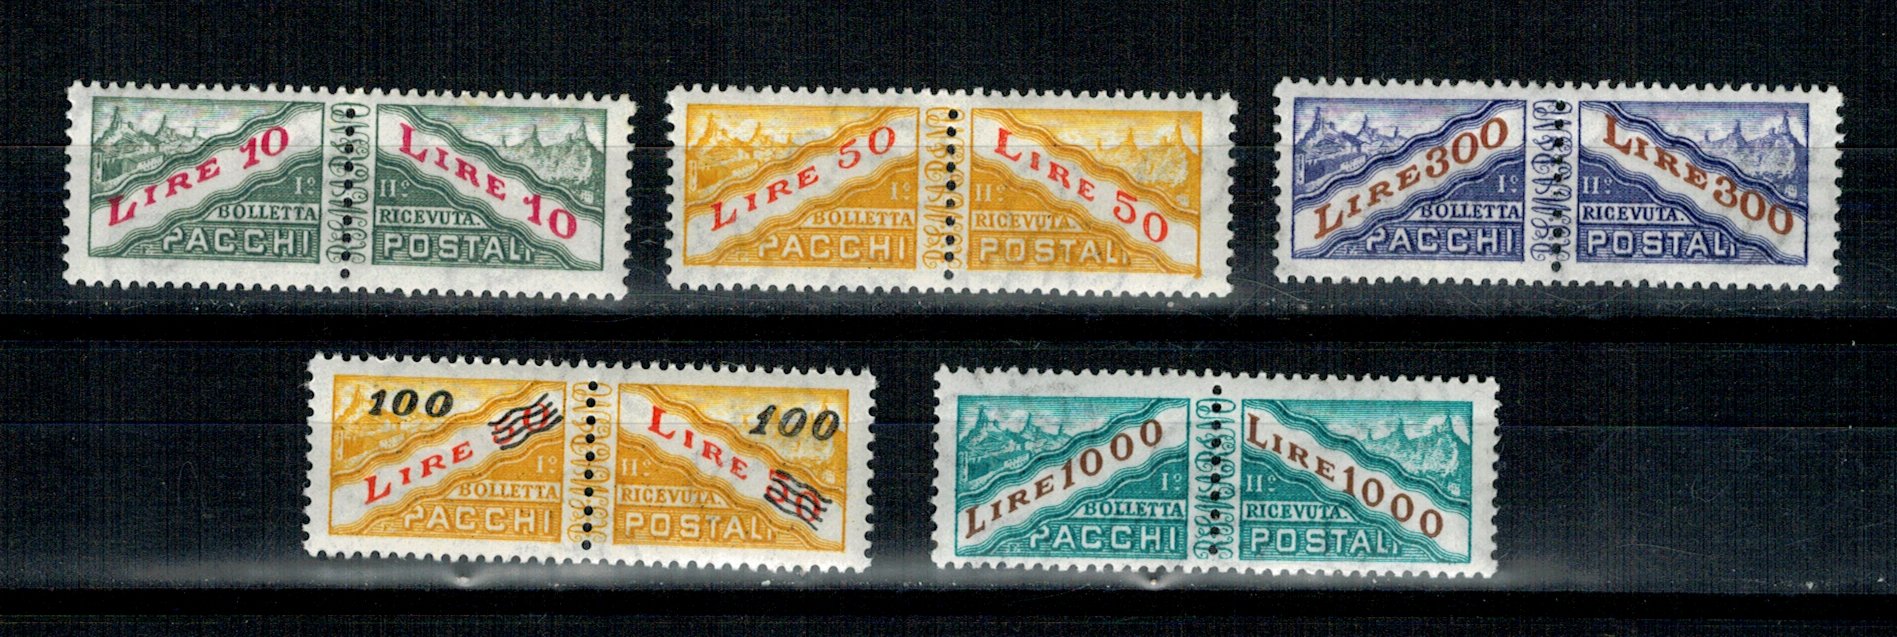 San Marino 1965/67 - Colete postale, Mi42-46 neuzate